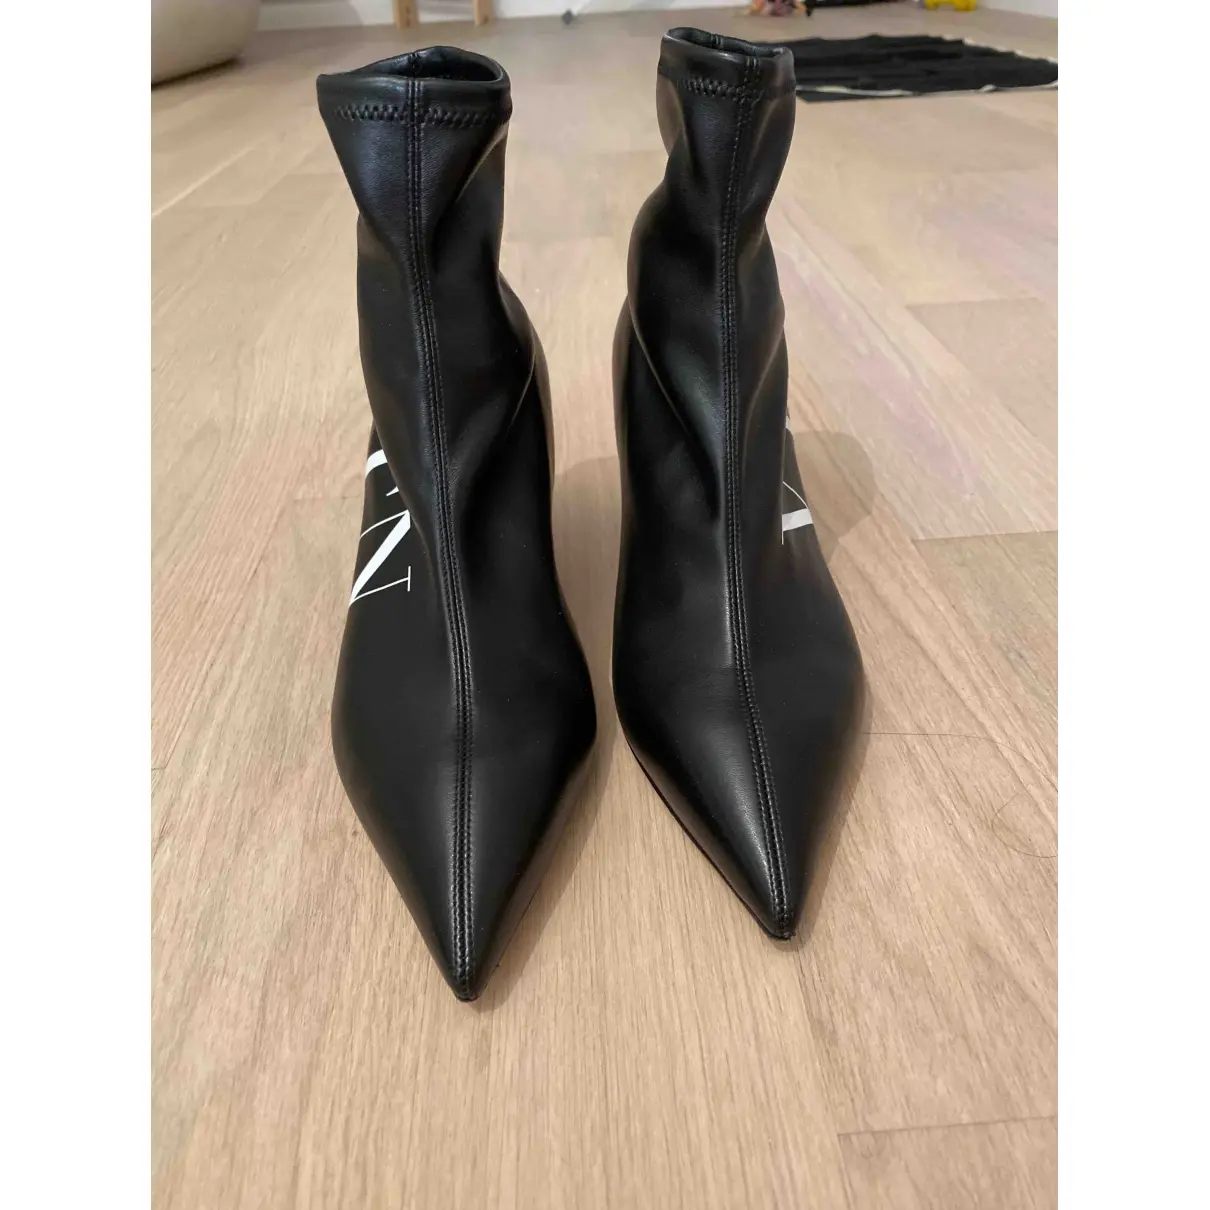 Buy Valentino Garavani VLTN leather ankle boots online